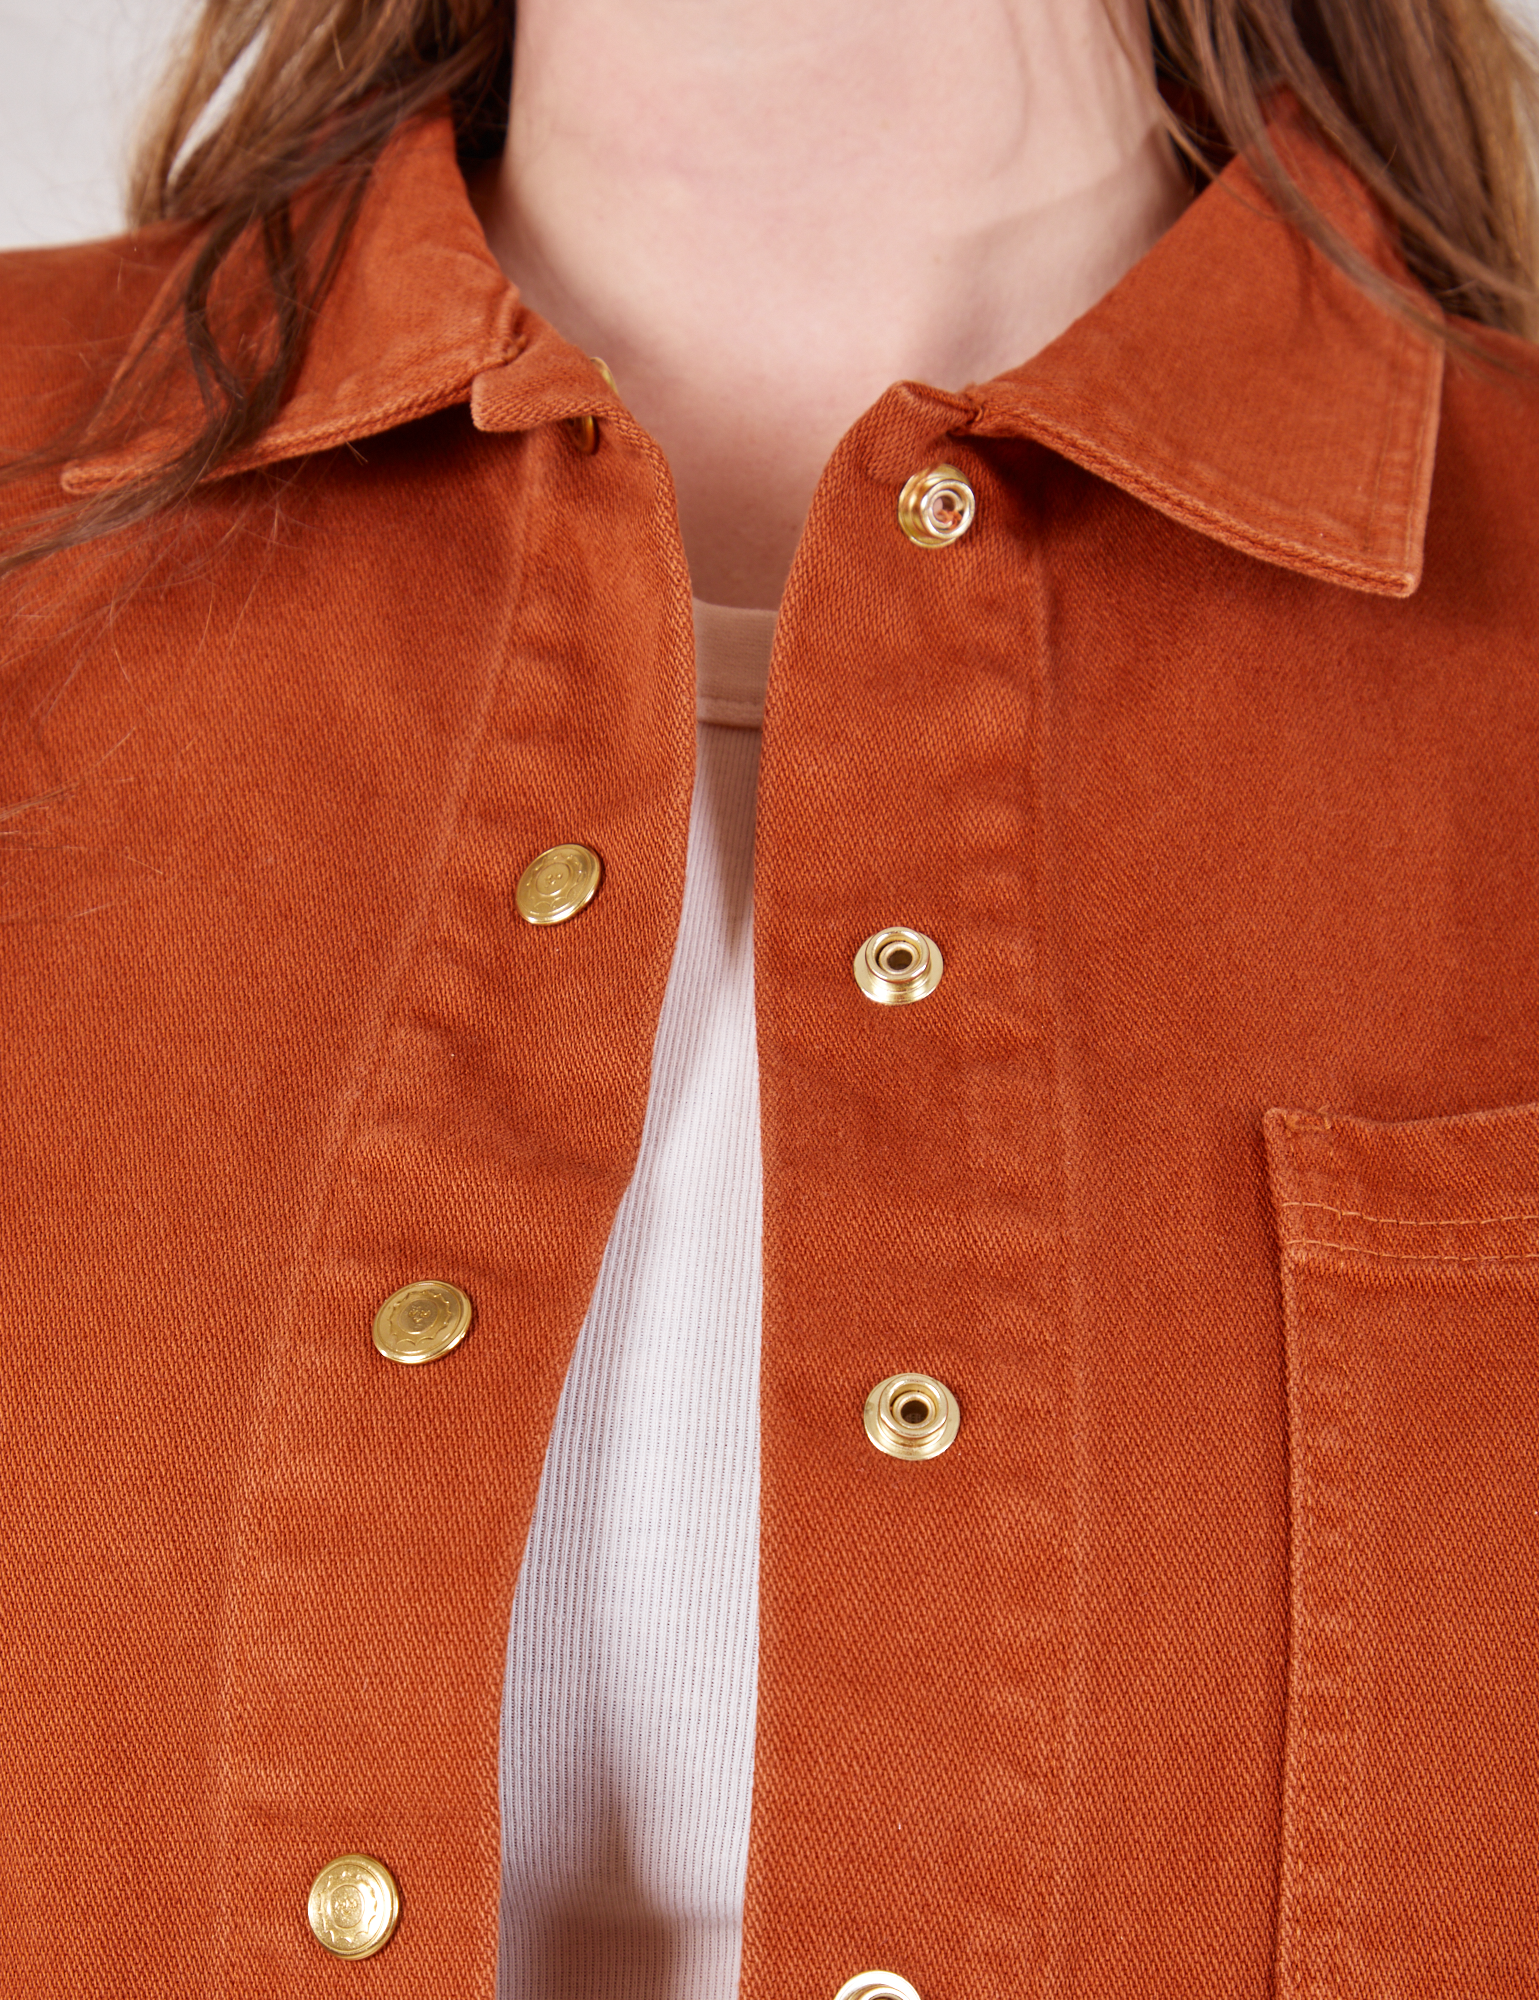 Denim Work Jacket in Burnt Terracotta front close up showing custom sun baby brass snaps